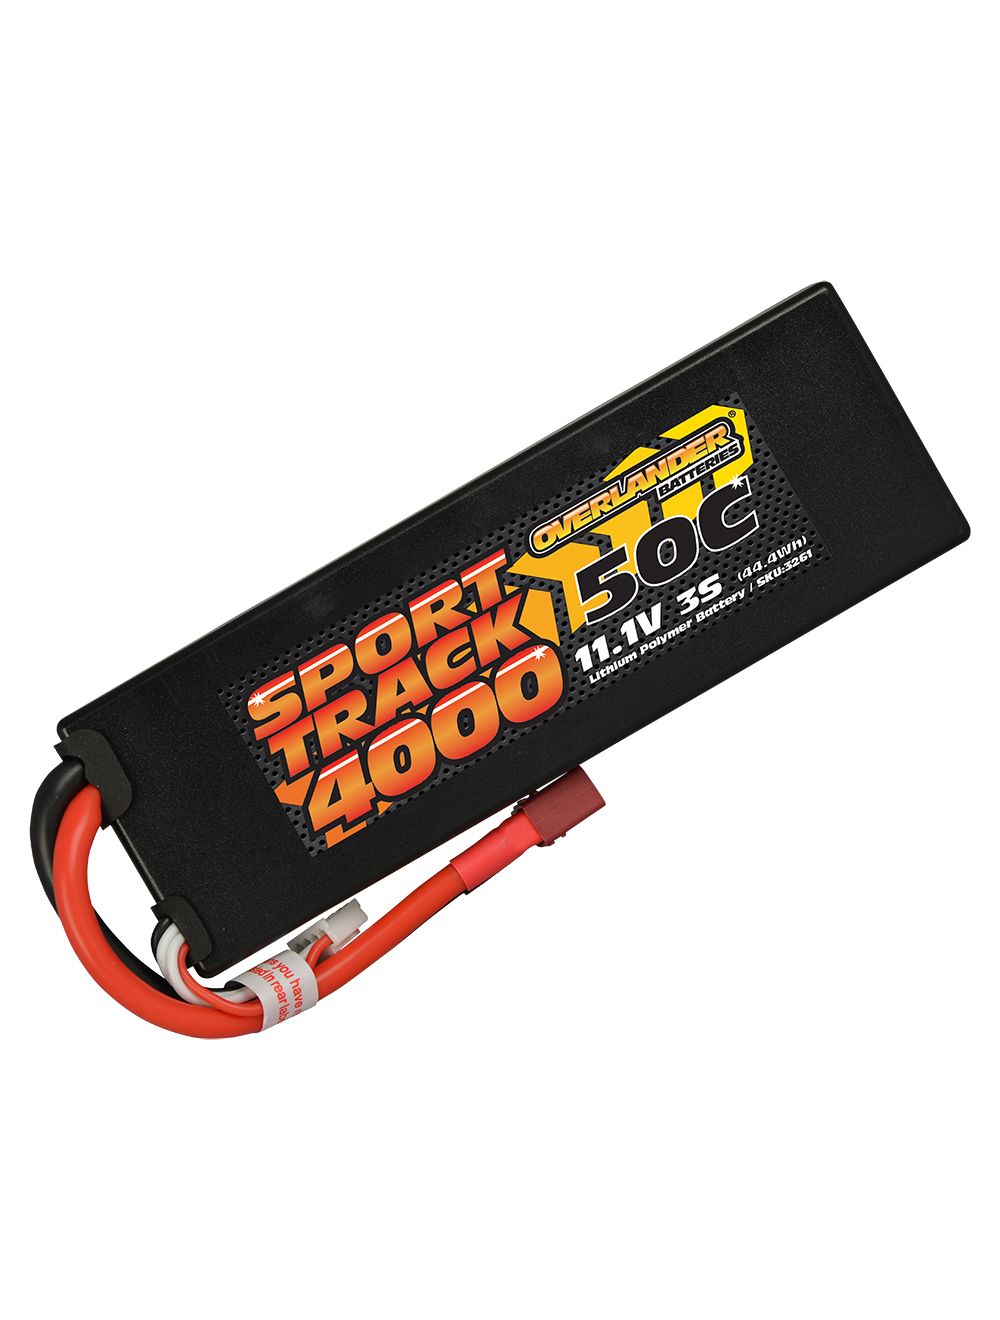 Overlander 4000mAh 11.1V 3S 50C Hard Case Sport Track LiPo Battery - EC5 Connector 3261